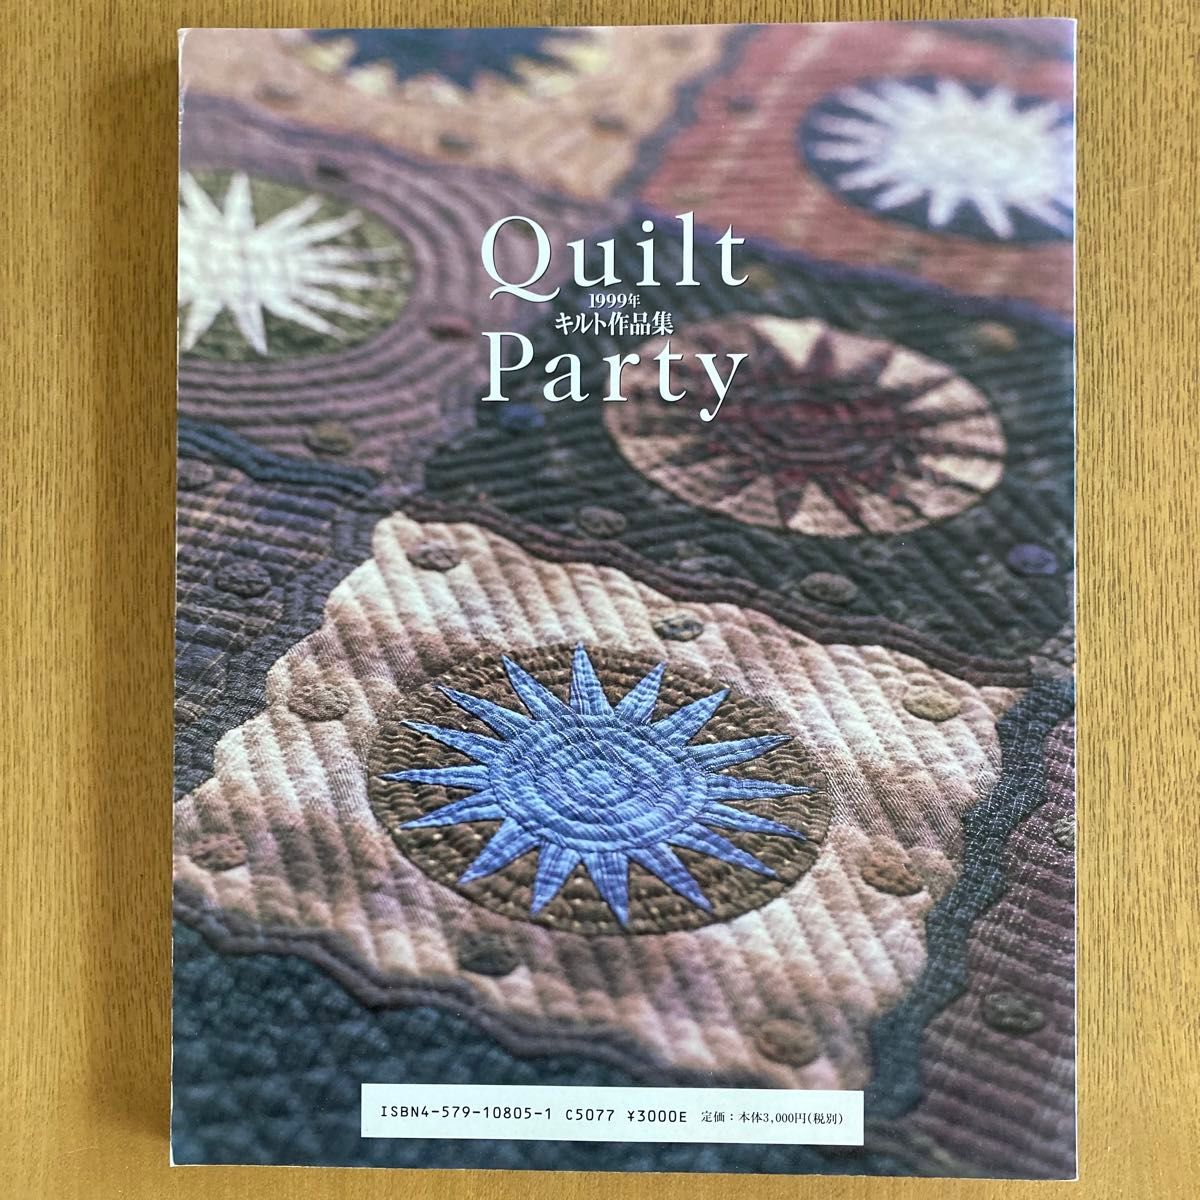 Quilt Party 1999年キルト作品集 斉藤謠子　キルトパーティ